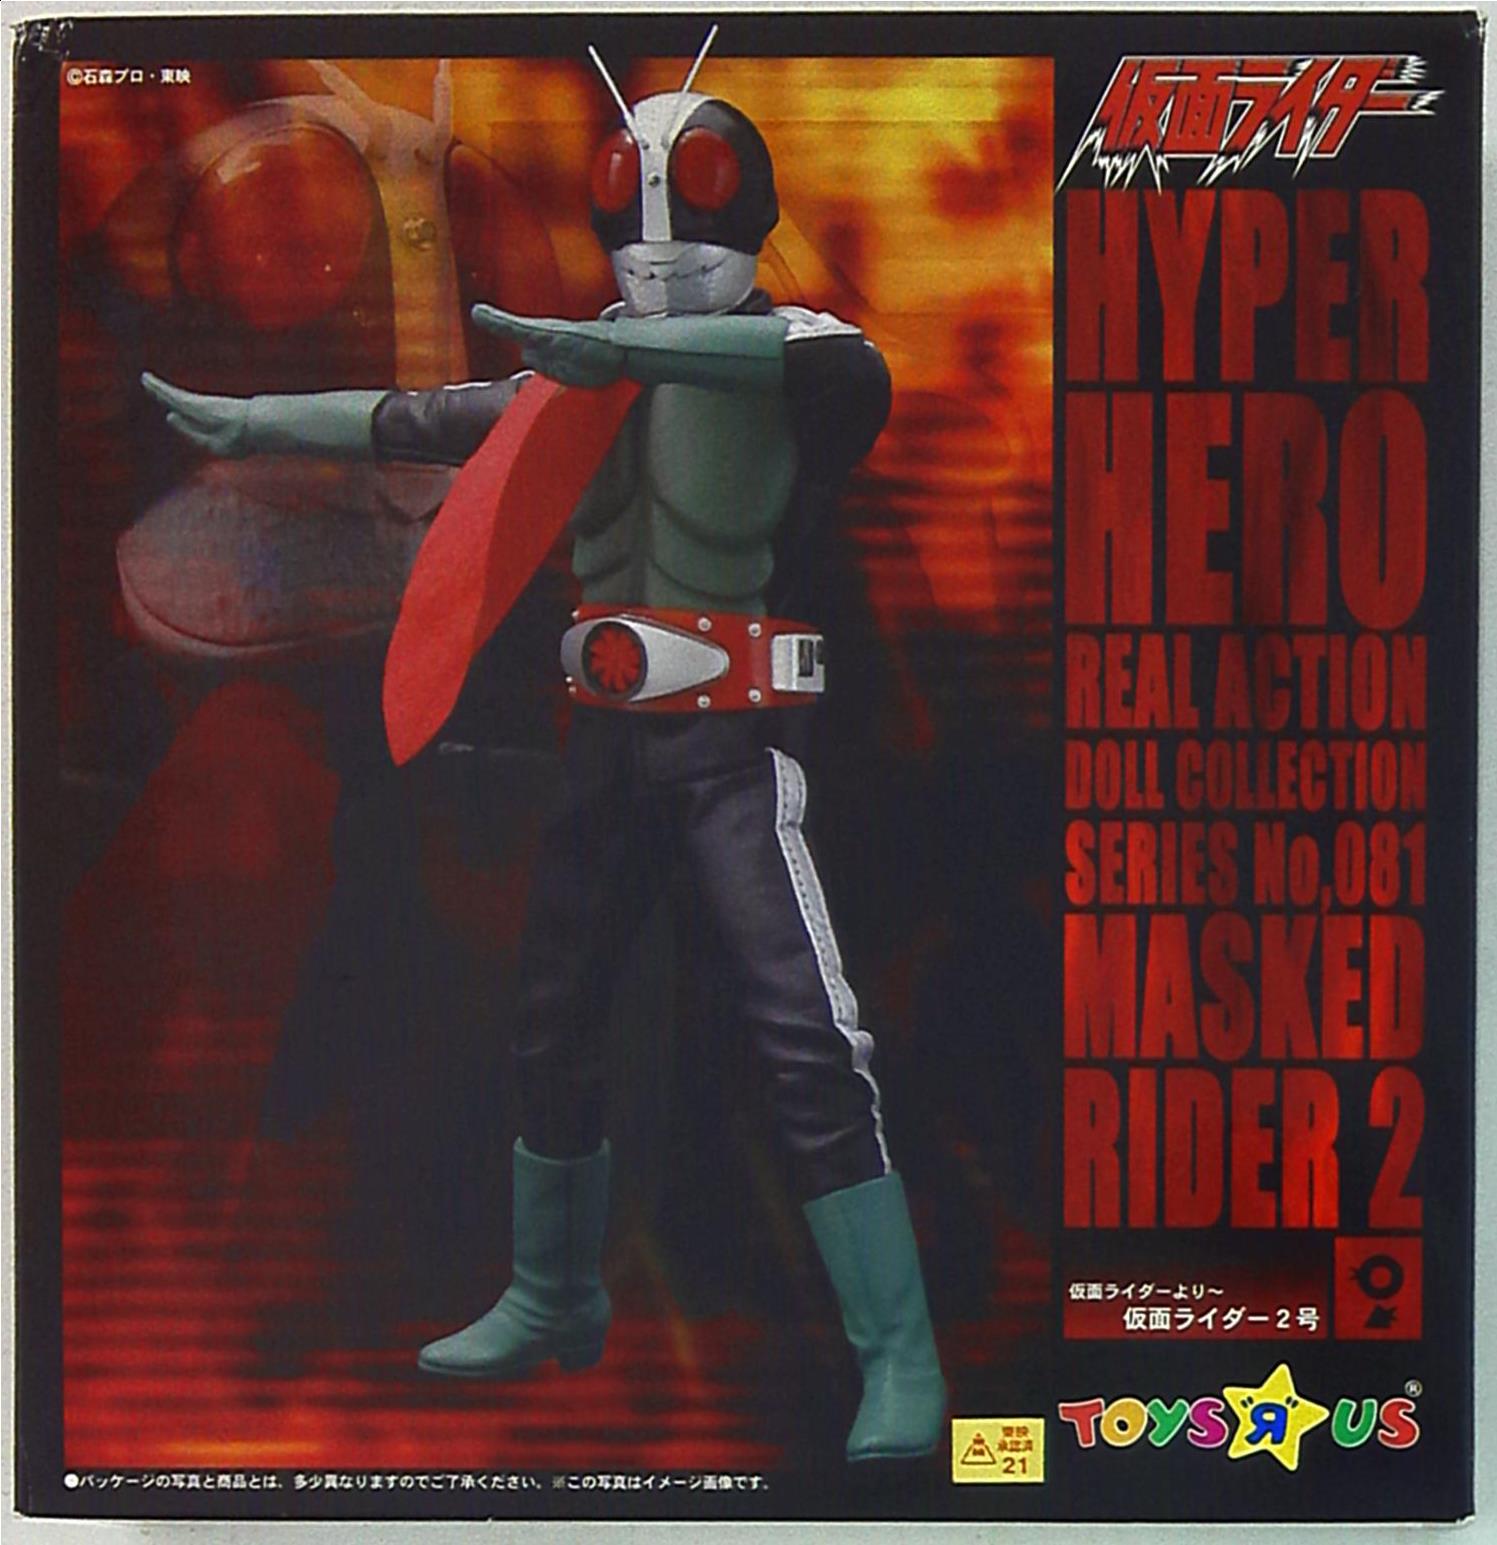 Otsuka planning hyper hero real action Doll collection Kamen Rider